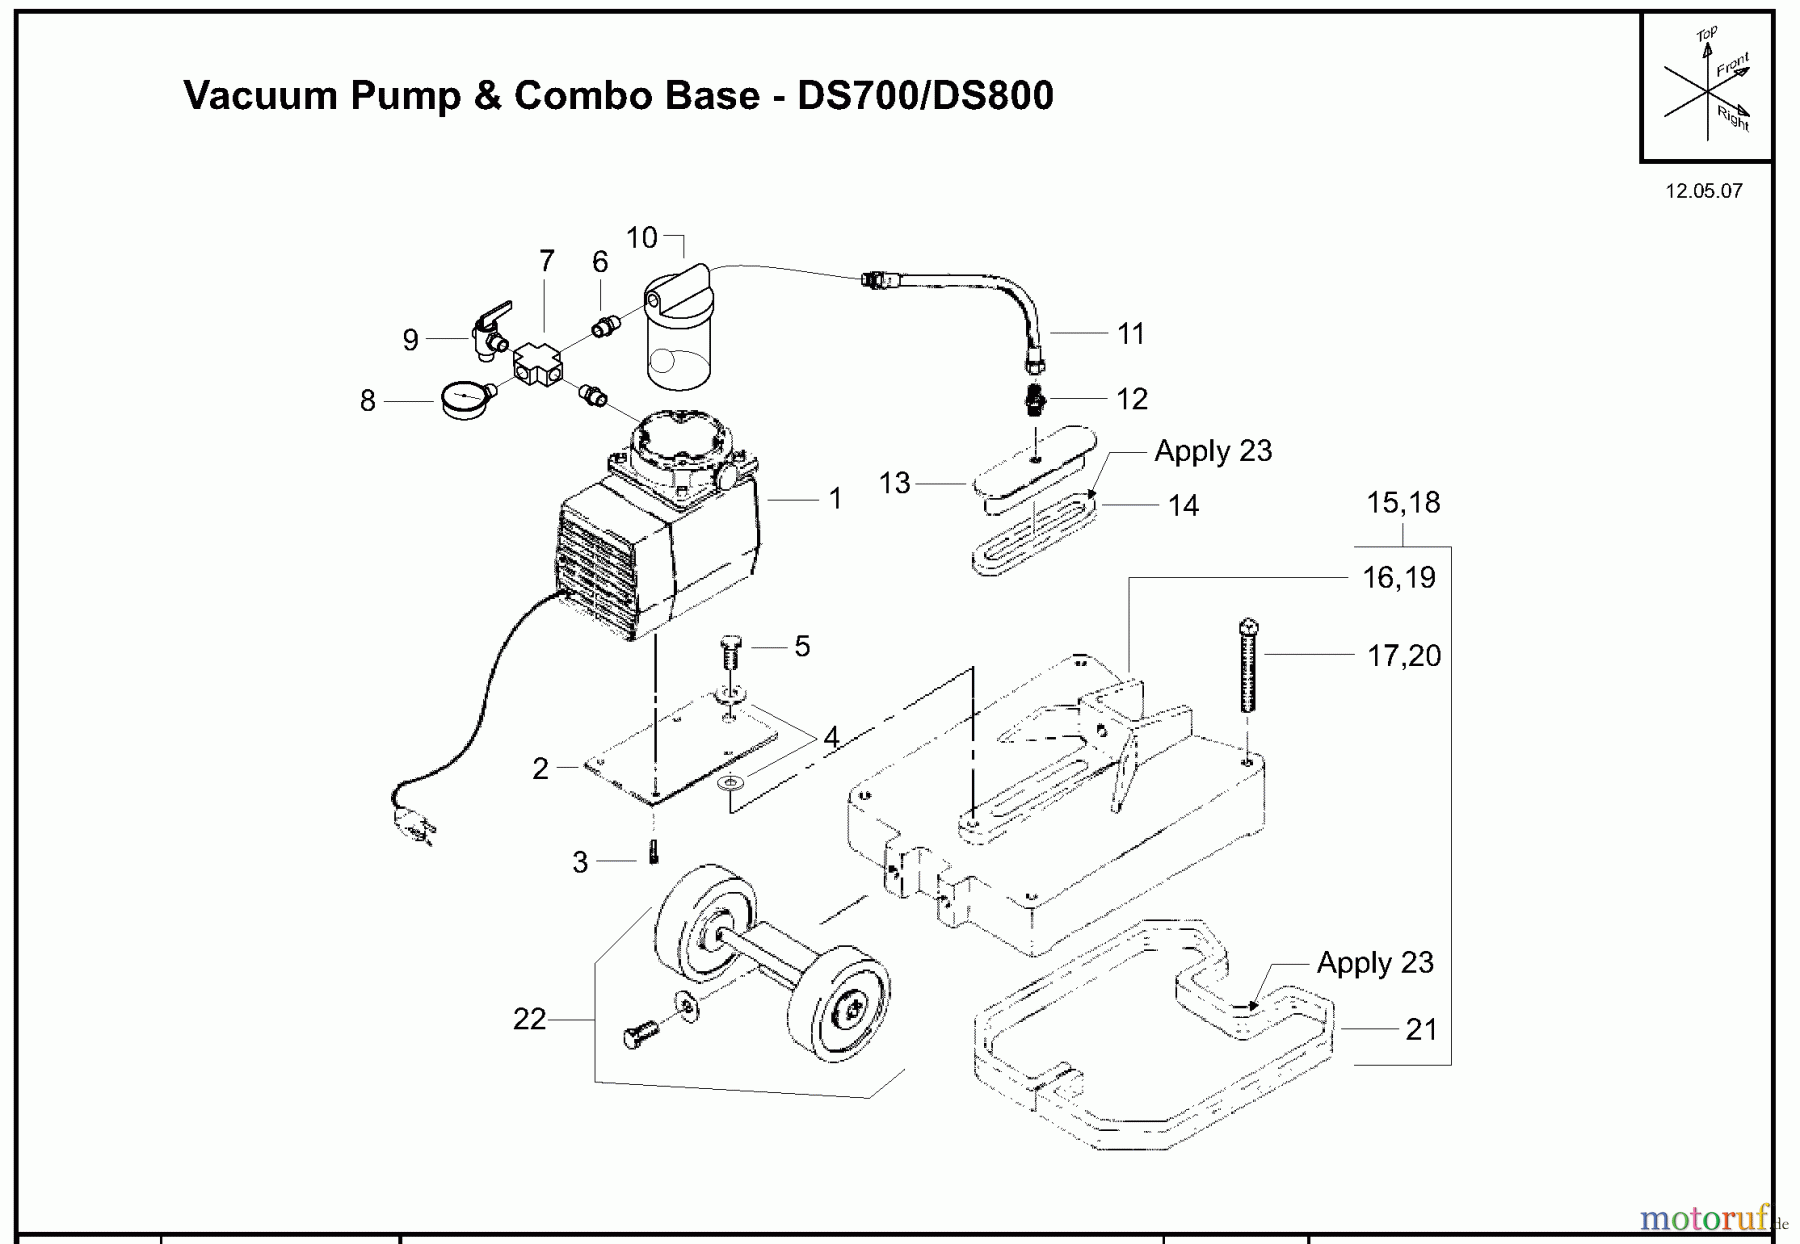  Husqvarna Zubehör DS700 (504625401) - Husqvarna Drill Stand (2007-12 & After) Vacuum Pump & Combo Base